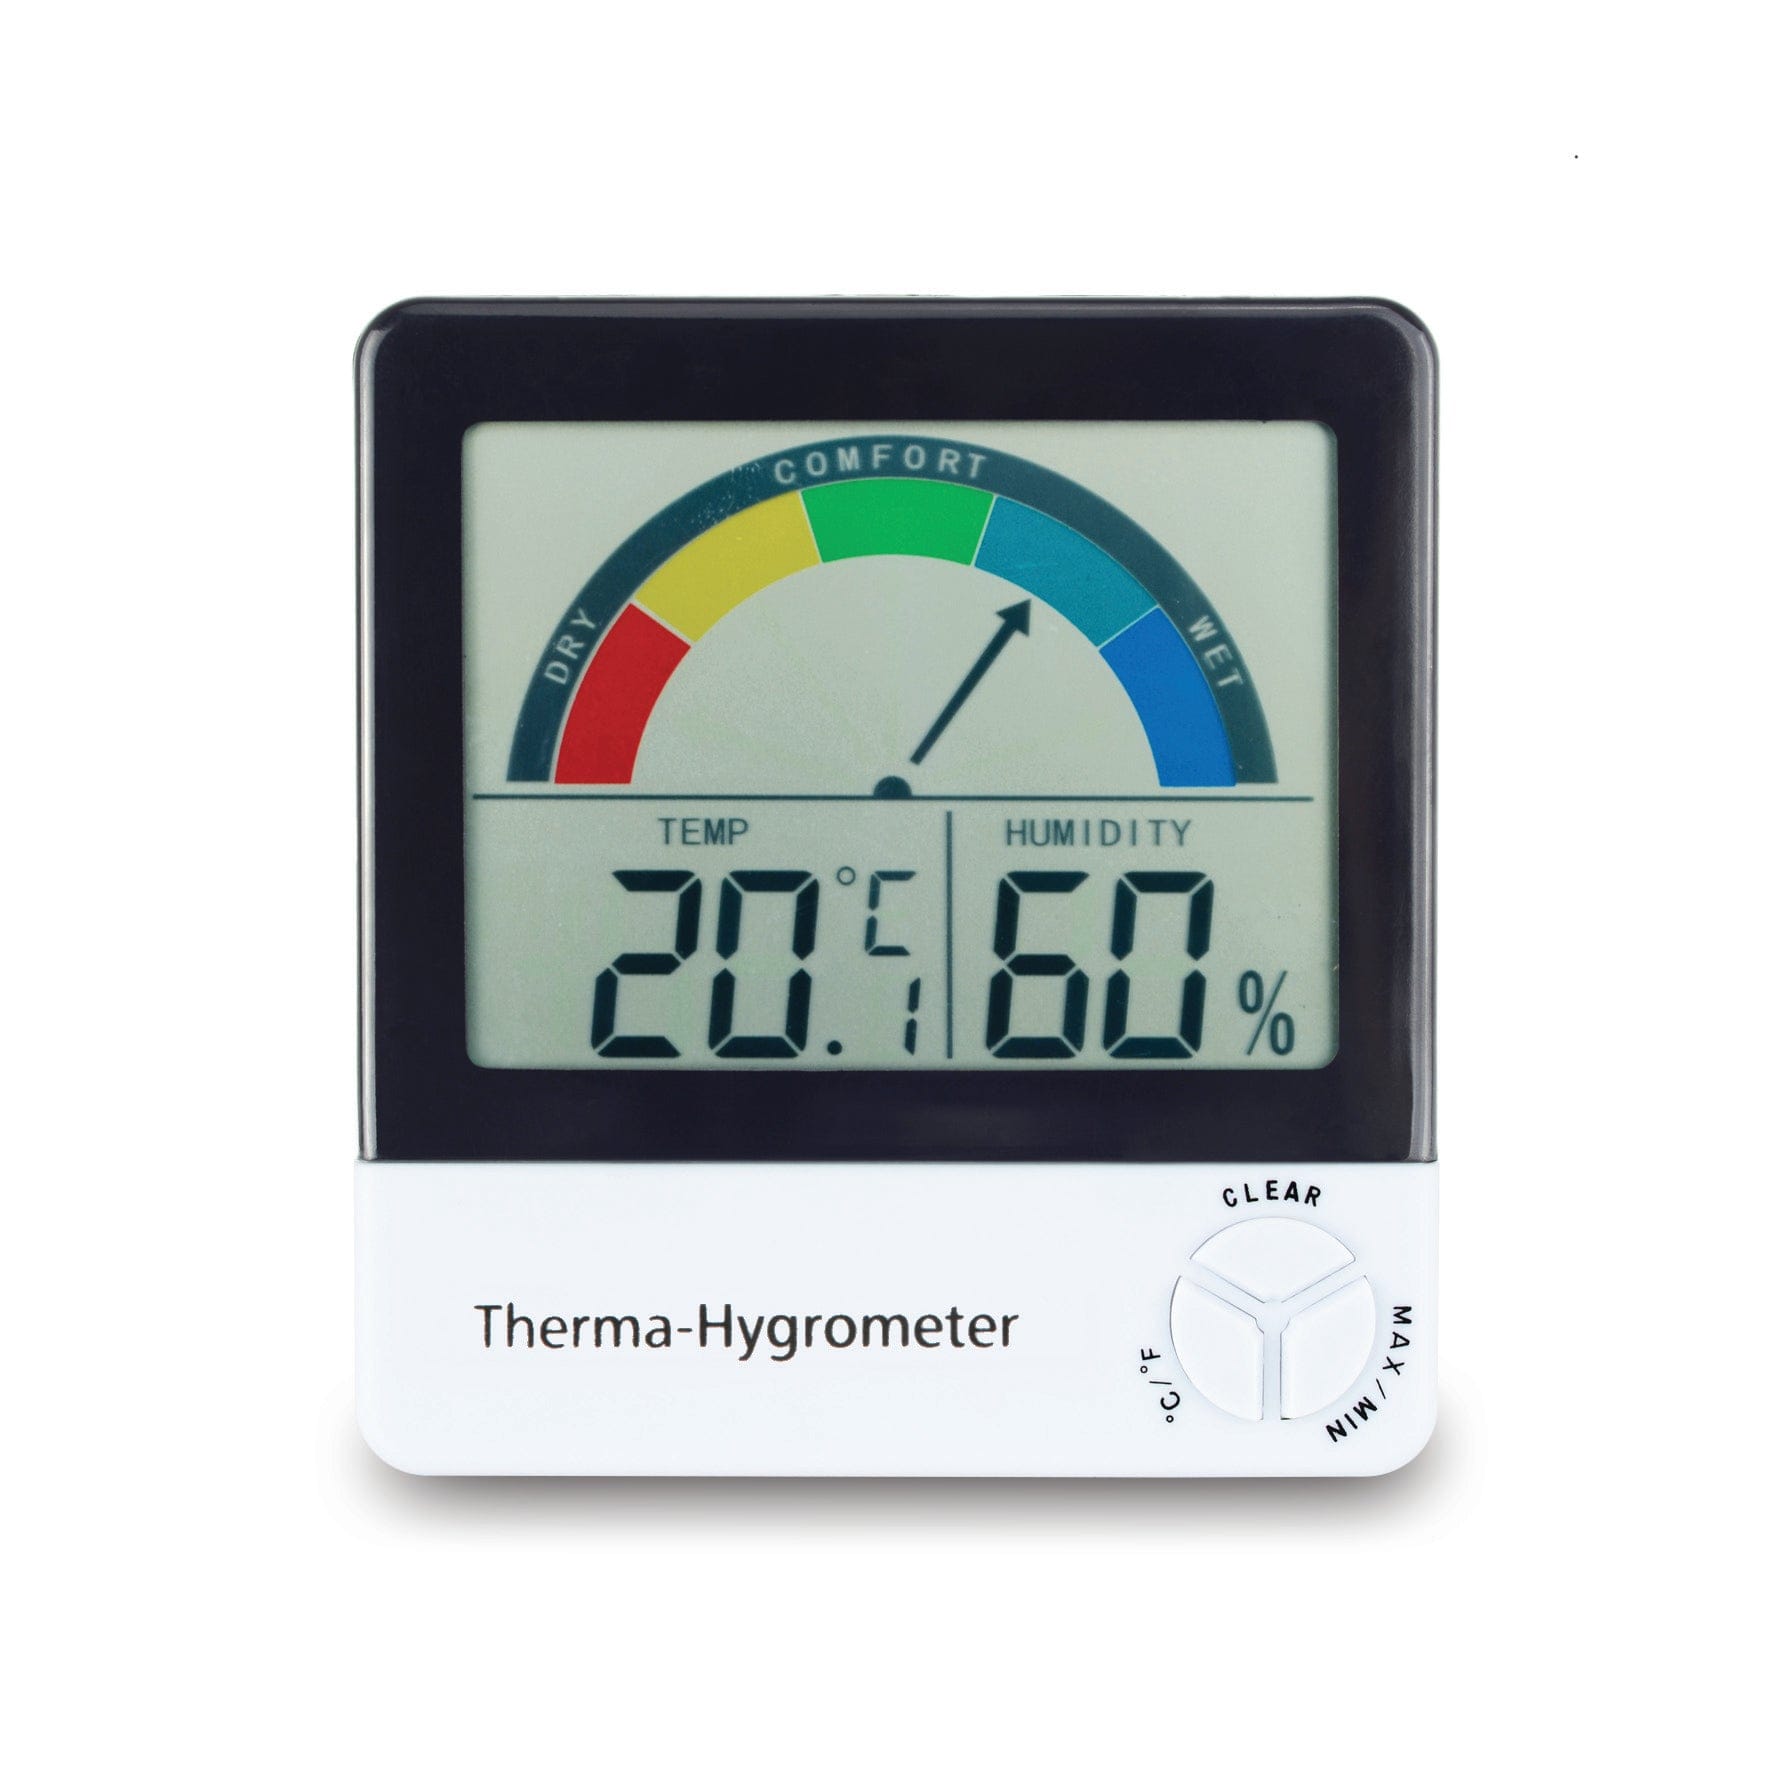 Thermomètres de restauration ThermaLite 1 –